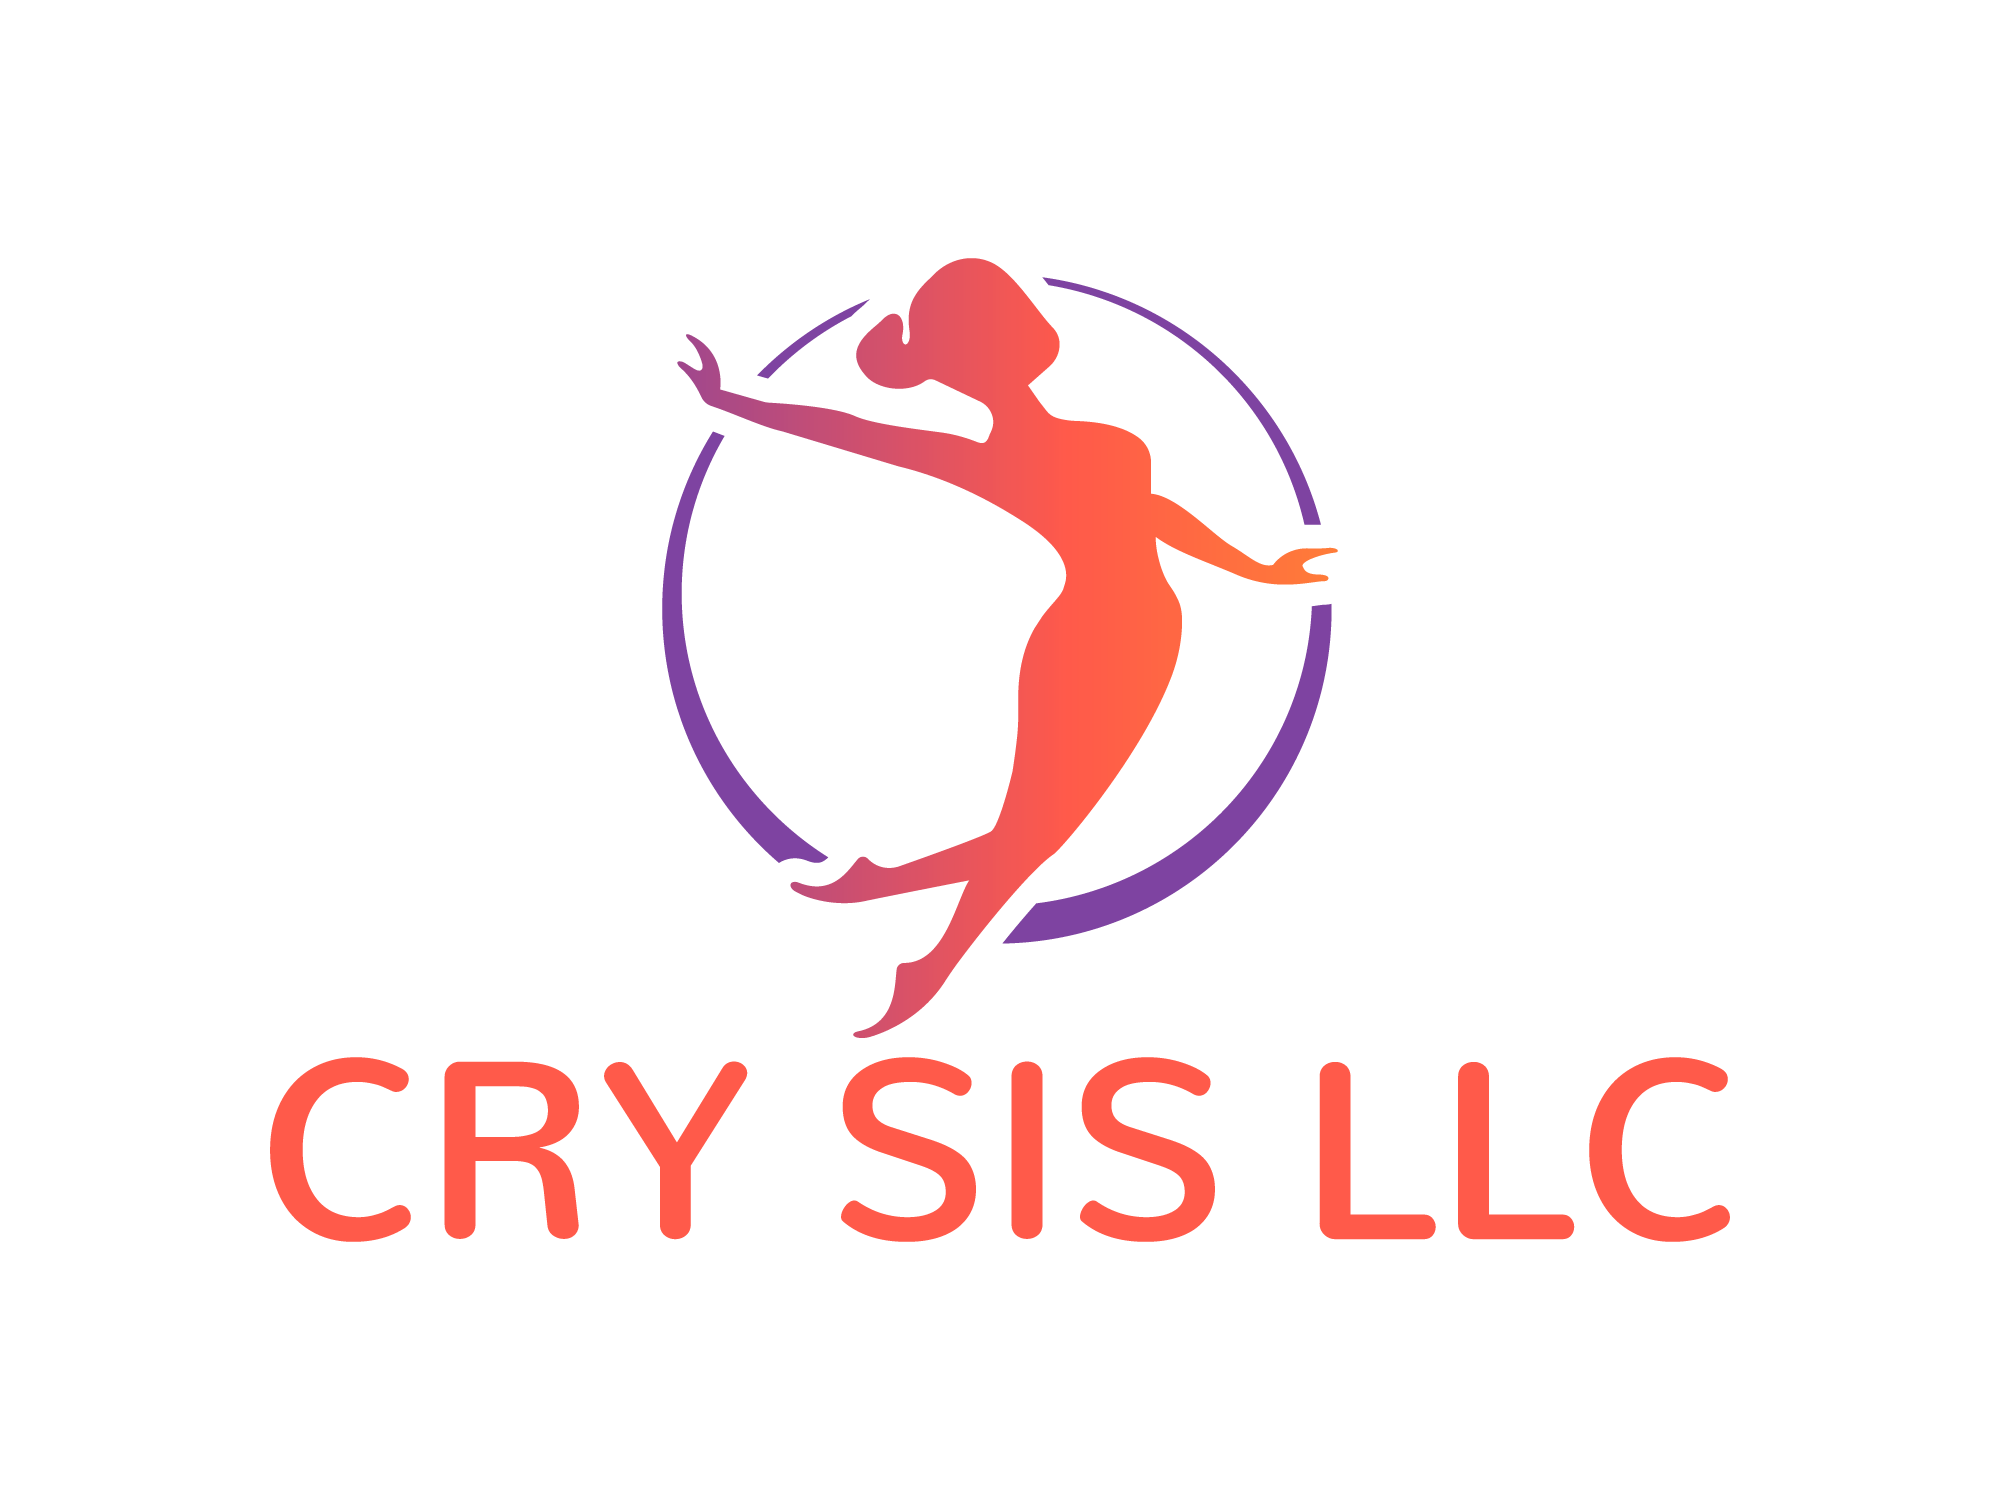 CRY SIS LLC CRYING SISTER UN501C3 FOUNDATION